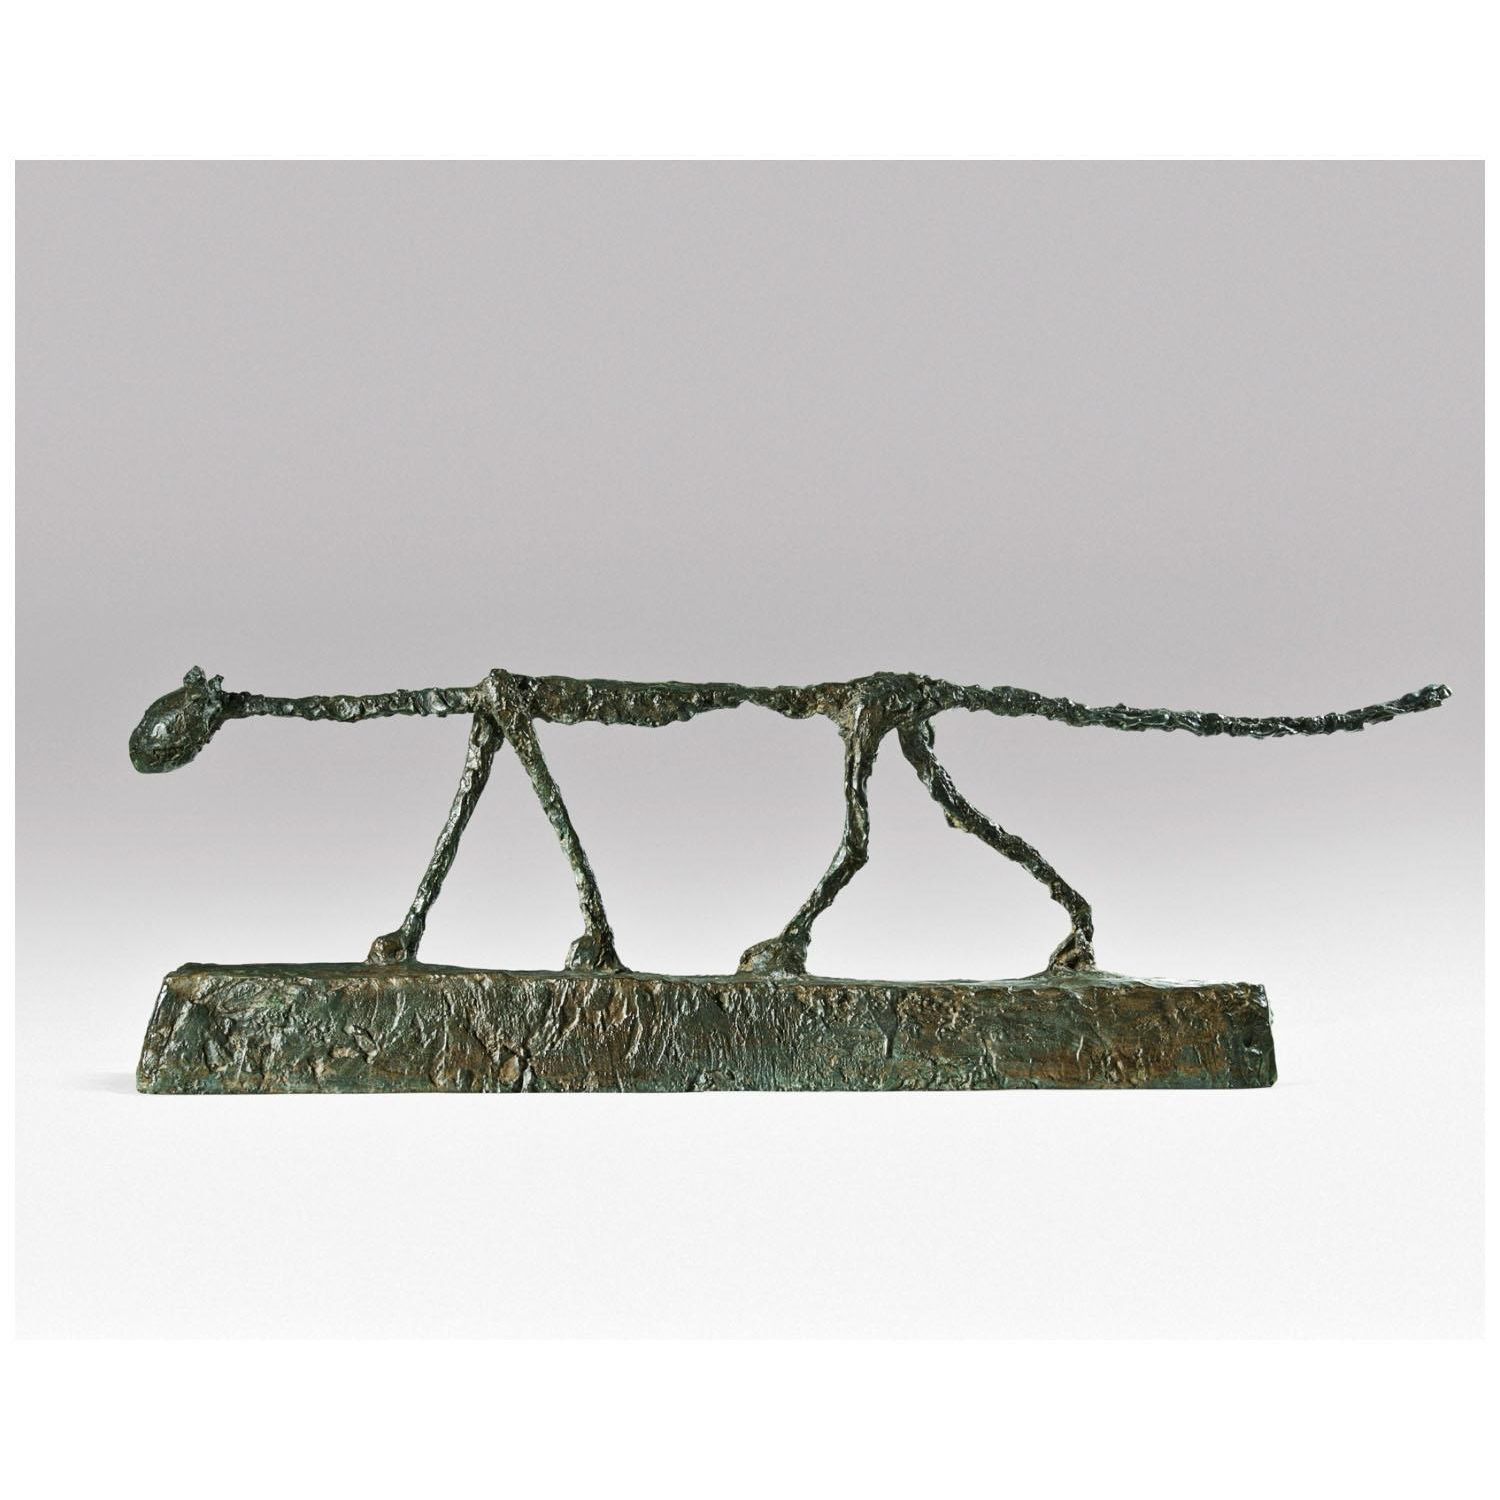 Alberto Giacometti. The Cat. 1955. Metropolitan Museum of Art NY